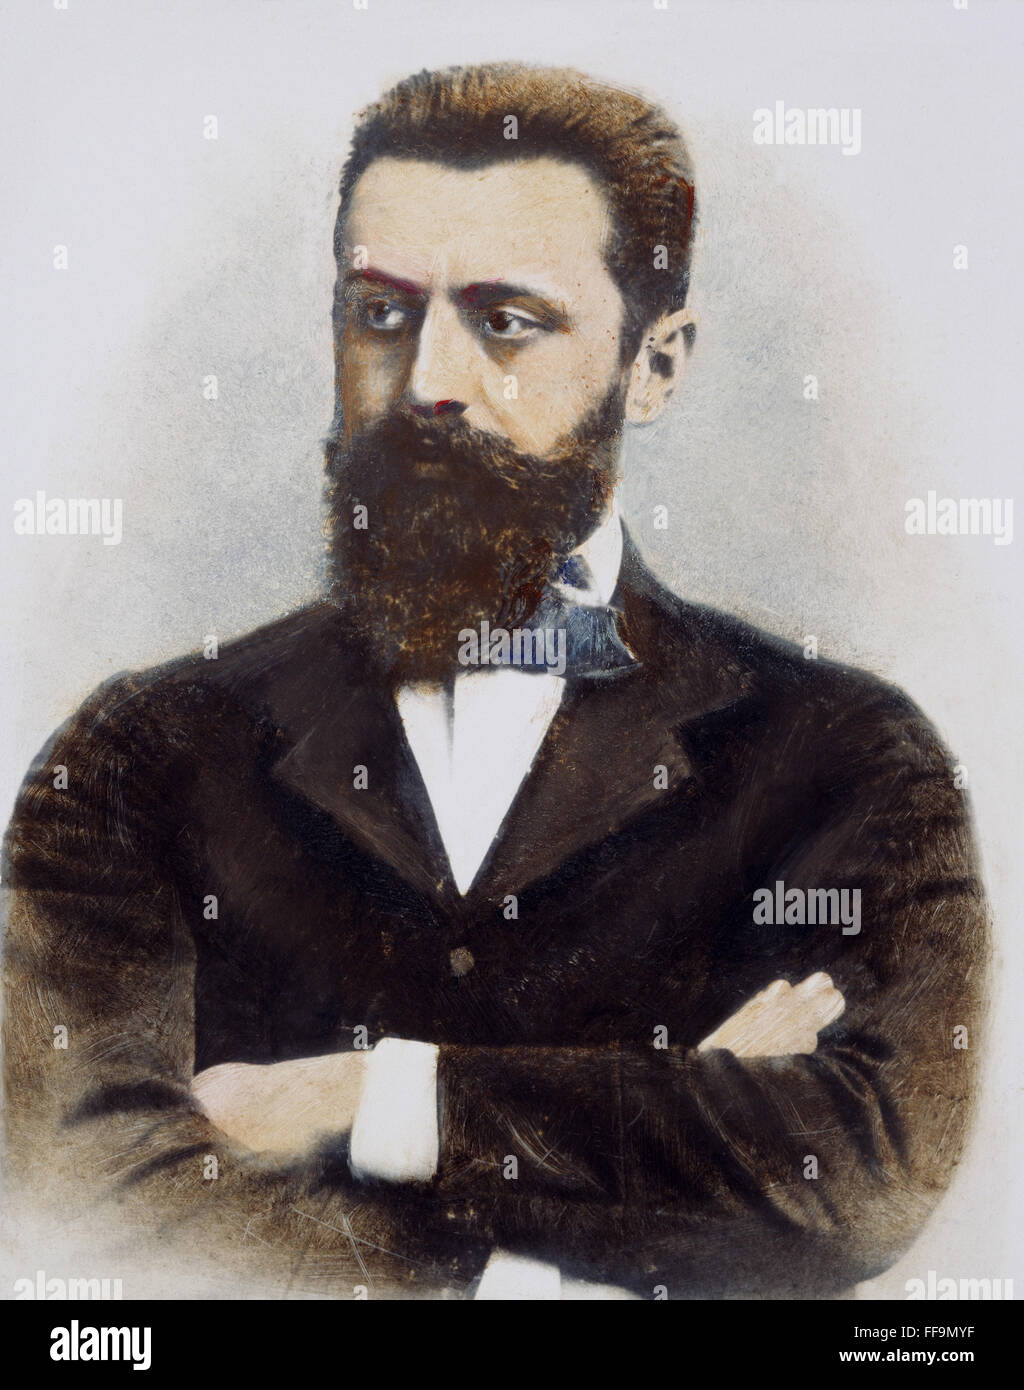 THEODOR HERZL (1860-1904). /NHungarian leader sionista. Olio Sopra una fotografia, n.d. Foto Stock